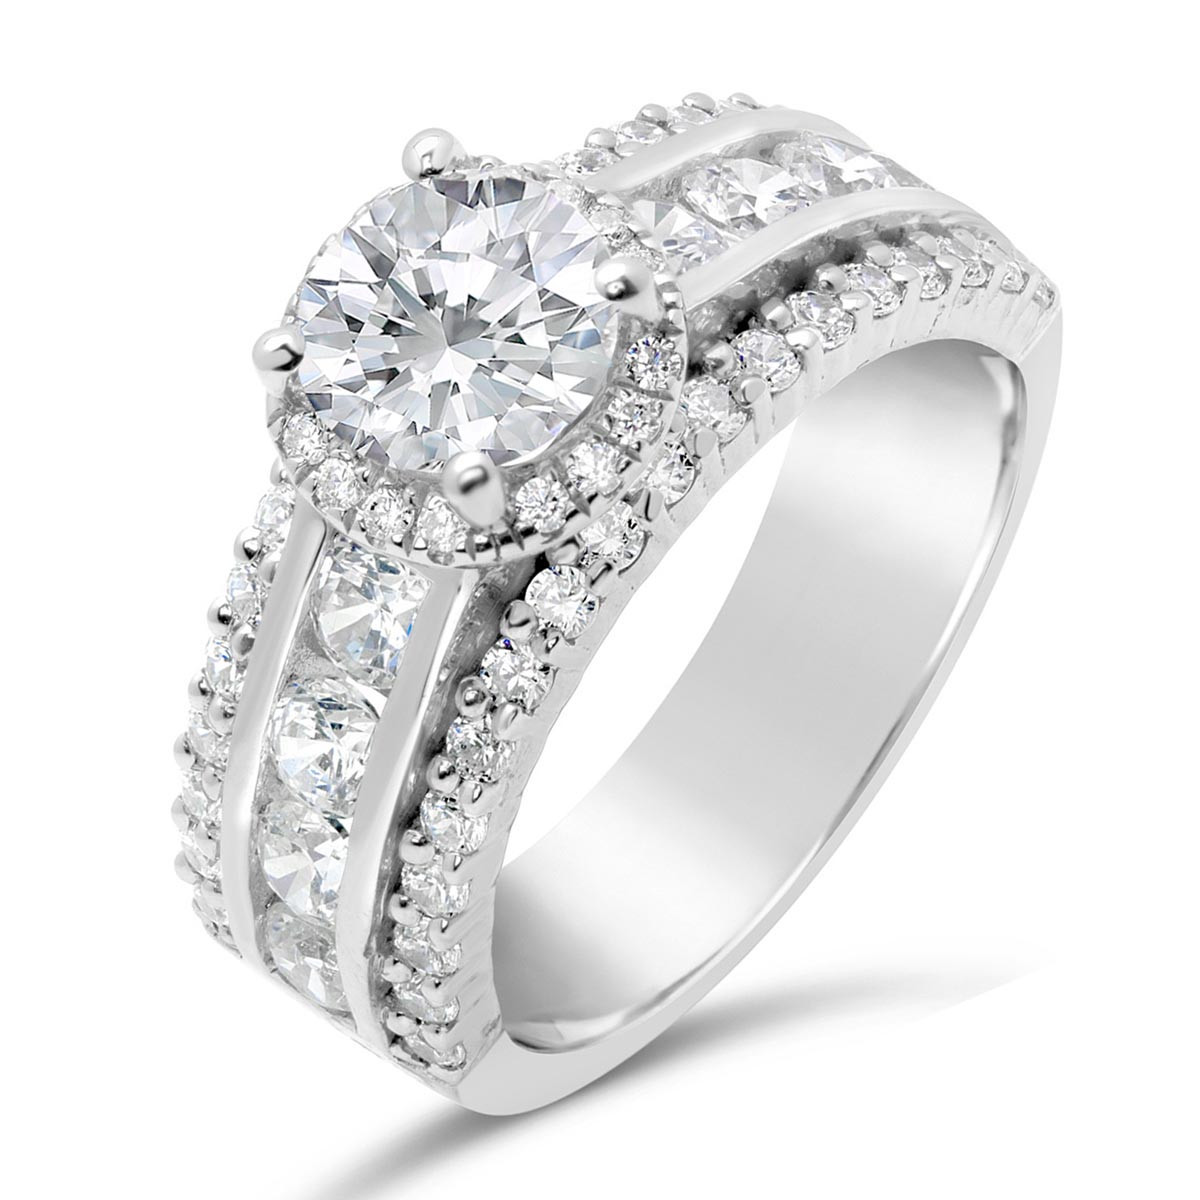 Wide Band Rings With Diamonds
 Diamond Halo Engagement Ring with Wide Band The Diamond